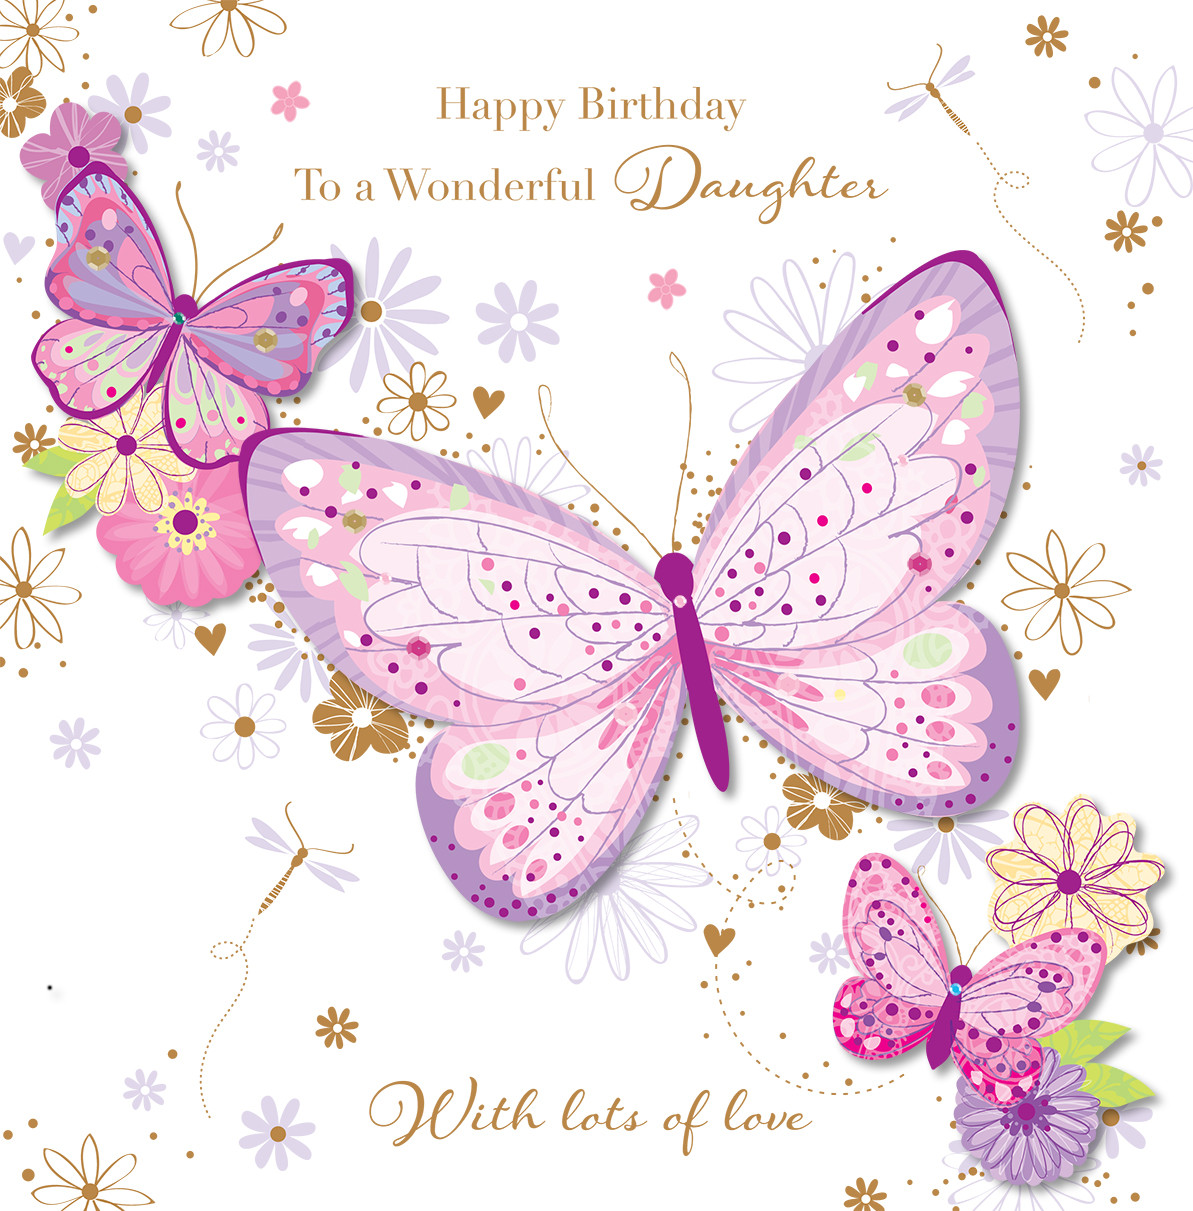 Happy Birthday Daughter Cards
 Wonderful Daughter Happy Birthday Greeting Card